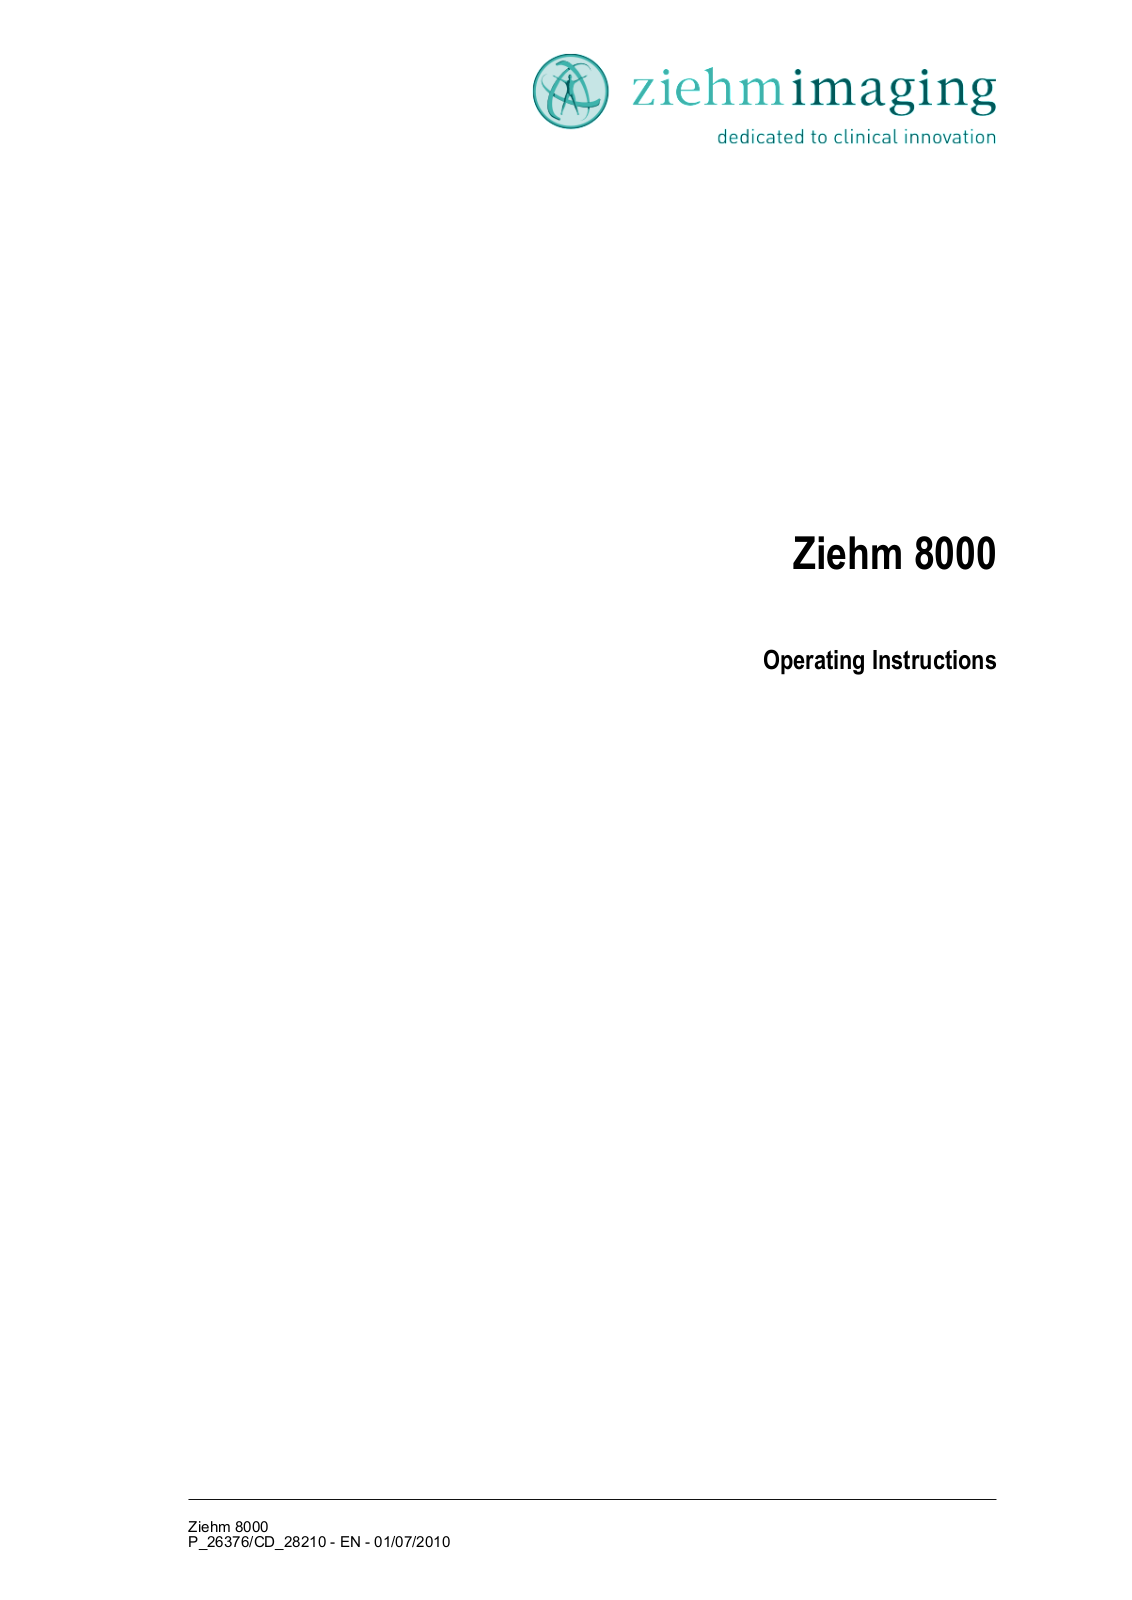 Ziehm 8000 C-Arm User Manual